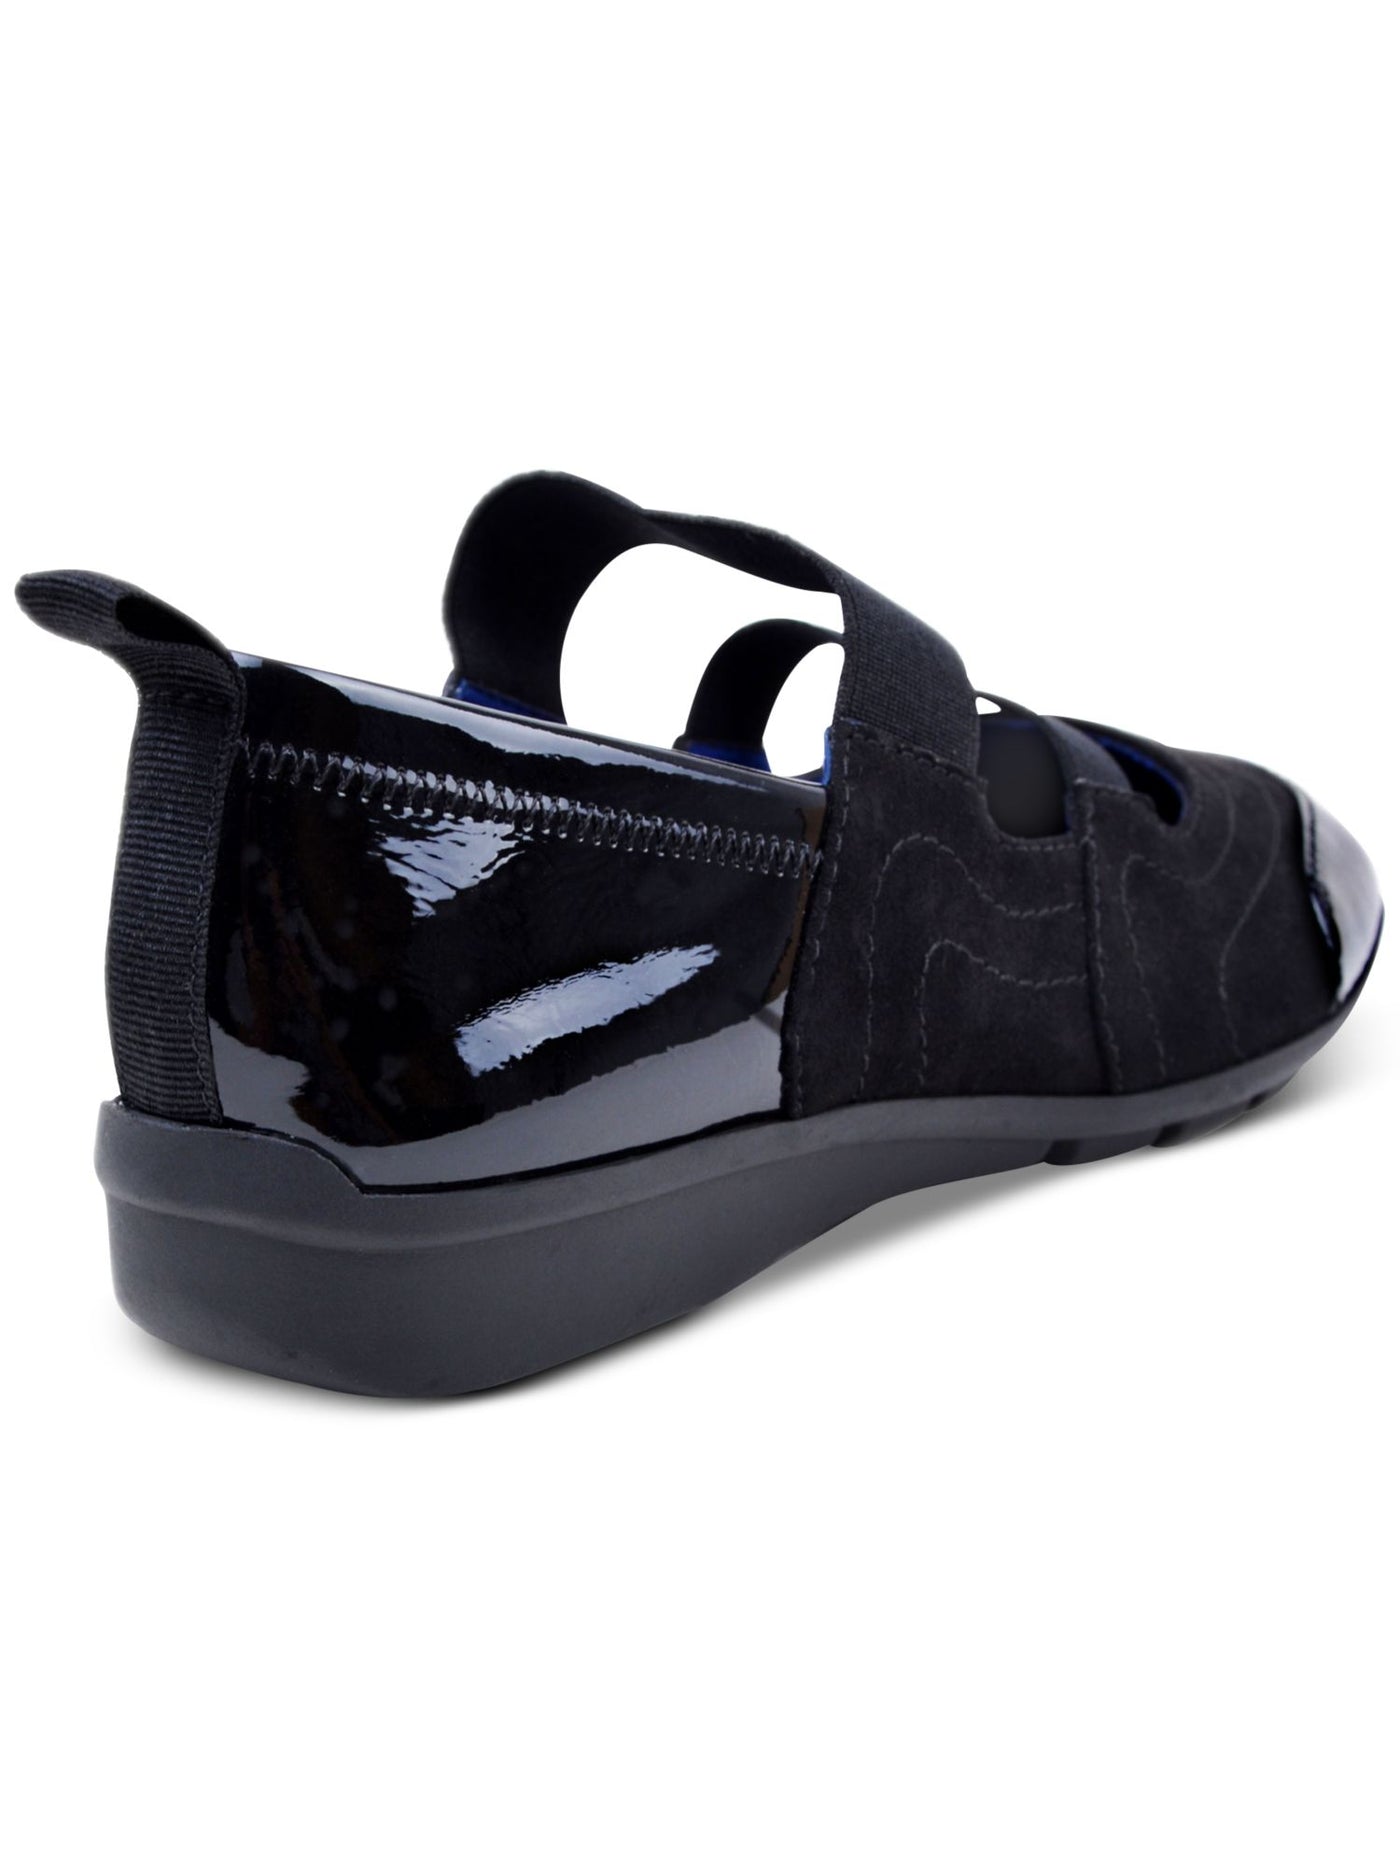 ADRIENNE VITTADINI SPORT Womens Black Stretch Gore Padded Ganesa Round Toe Flats Shoes 7 M